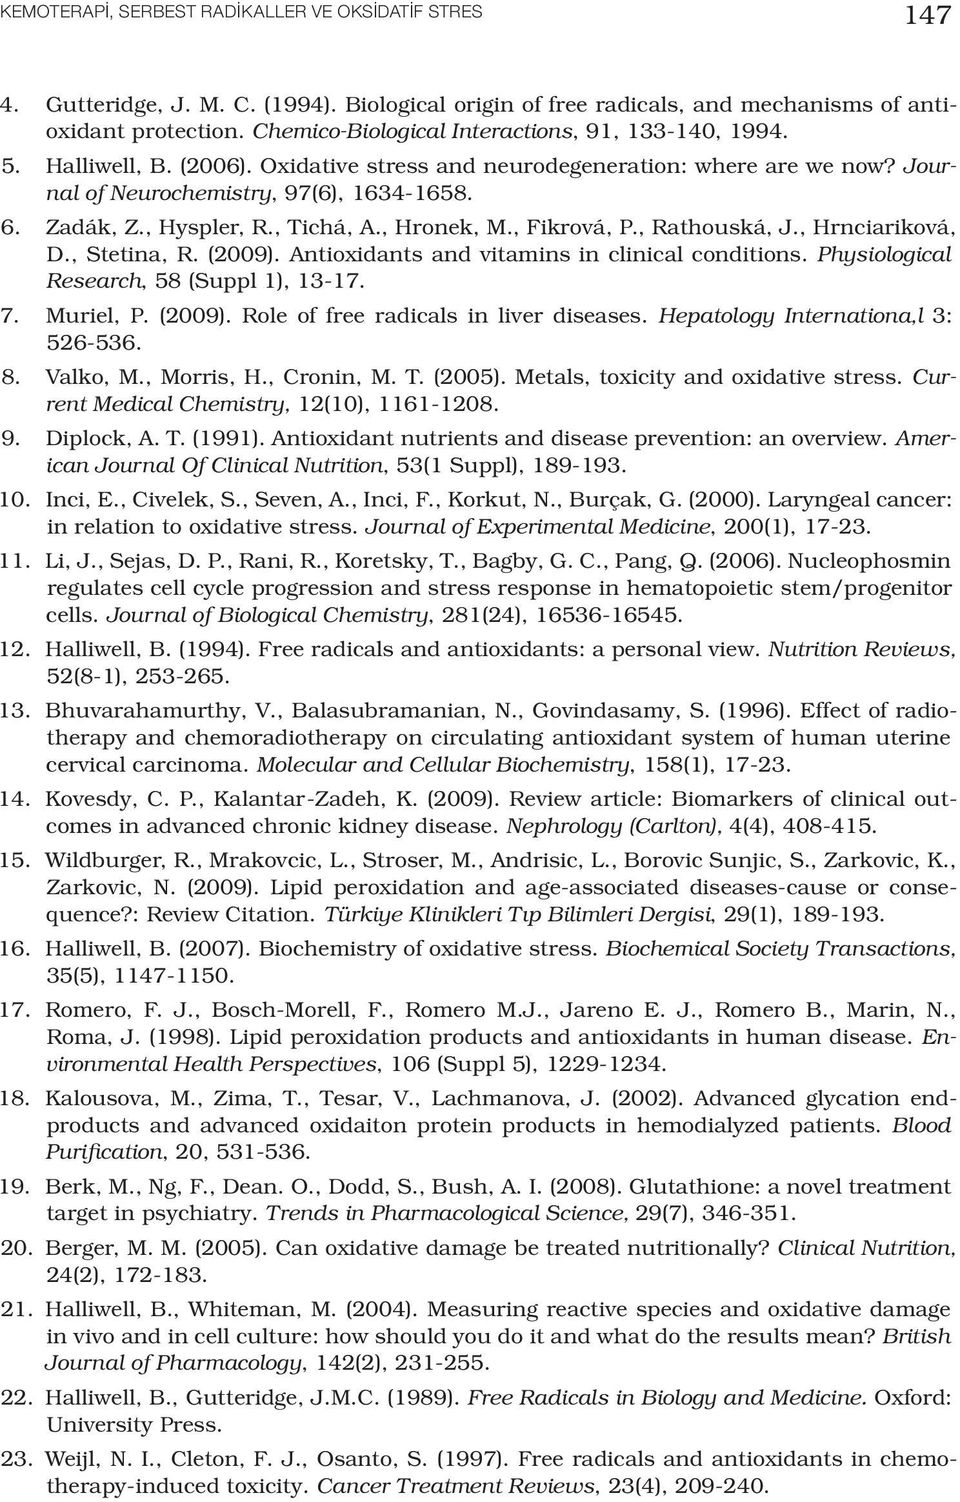 , Hyspler, R., Tichá, A., Hronek, M., Fikrová, P., Rathouská, J., Hrnciariková, D., Stetina, R. (2009). Antioxidants and vitamins in clinical conditions. Physiological Research, 58 (Suppl 1), 13-17.